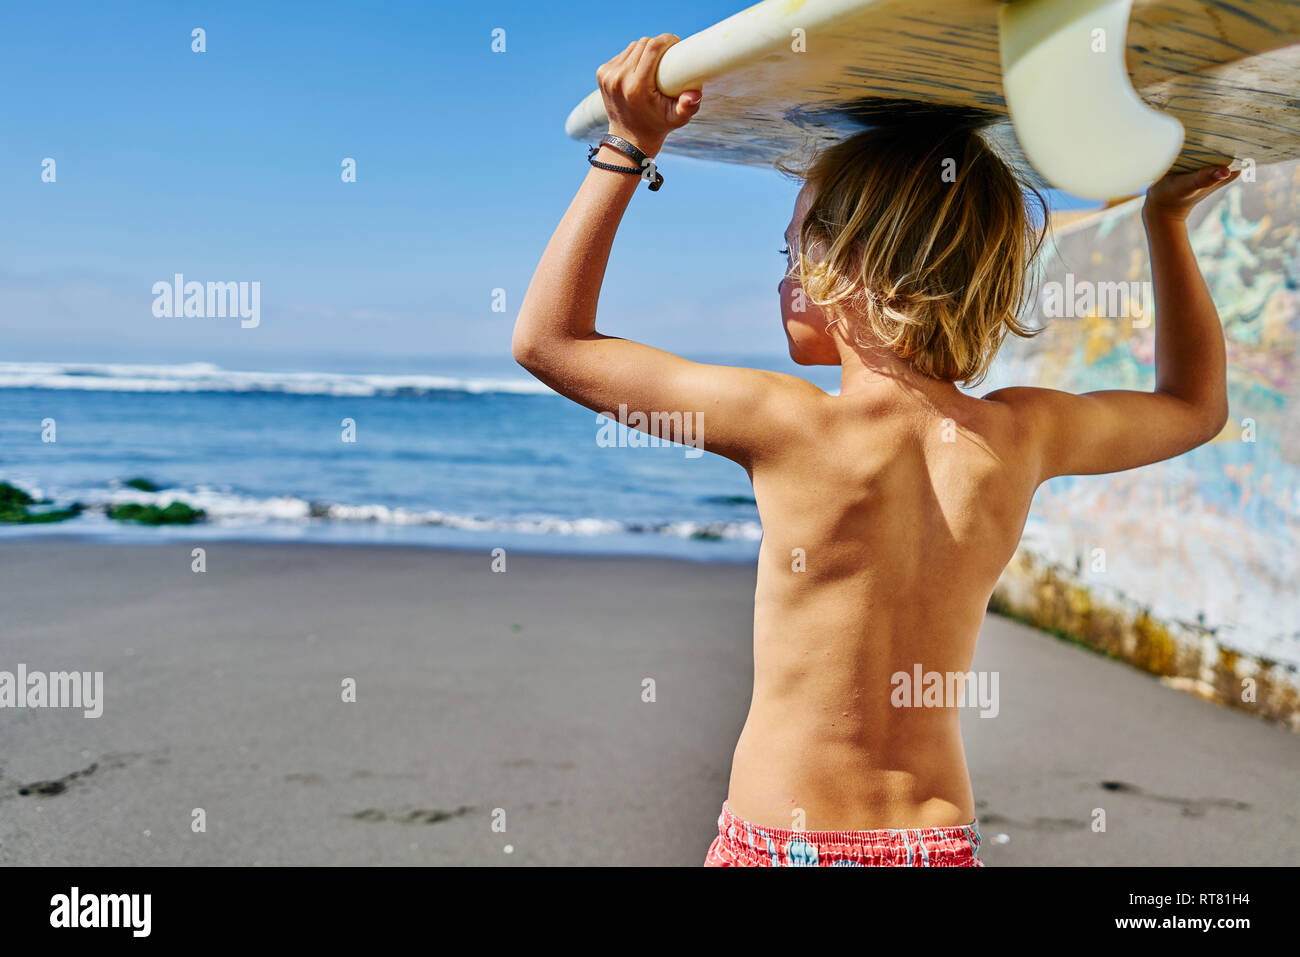 Le Chili, Puerto Maldonado, boy carrying surfboard at the sea Banque D'Images